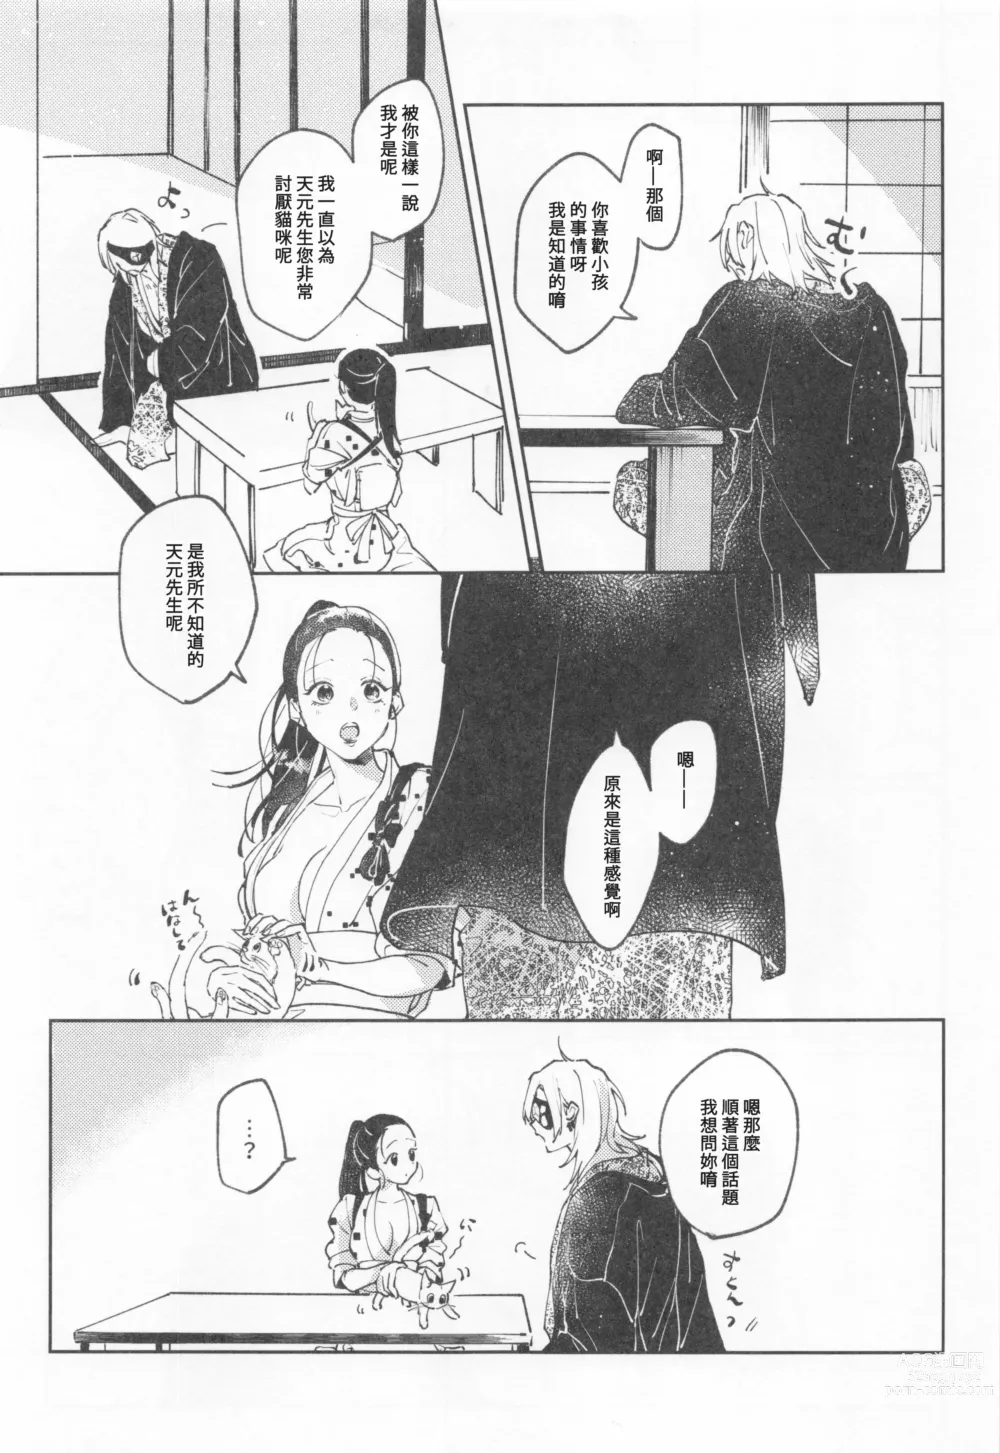 Page 6 of doujinshi H. - Cichidotto.